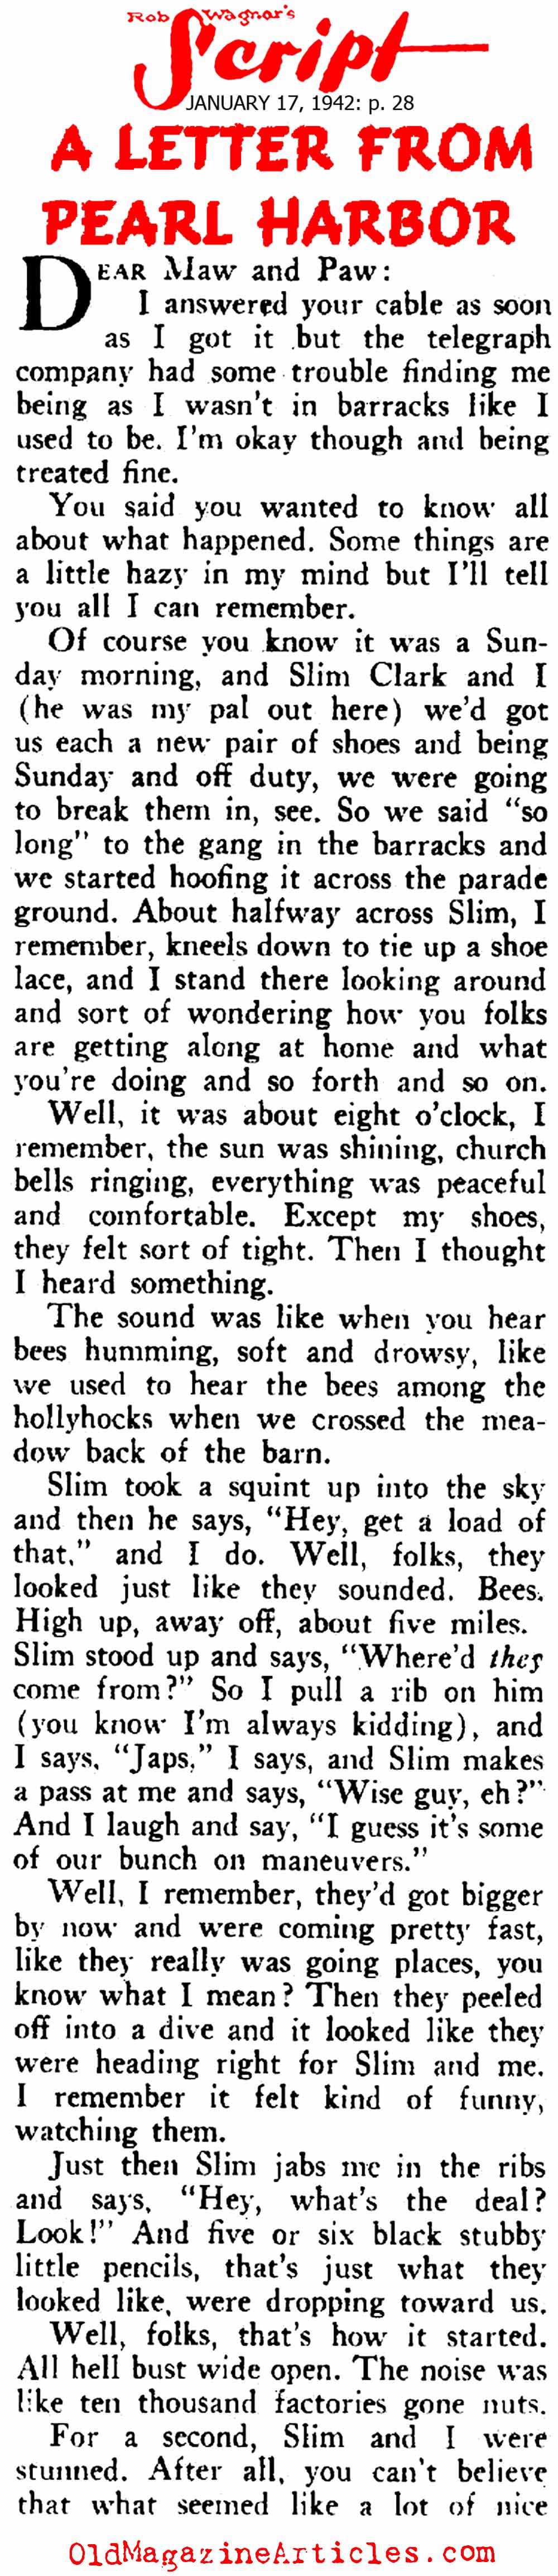 Eyewitness to Pearl Harbor (Rob Wagner's Script Magazine, 1942)